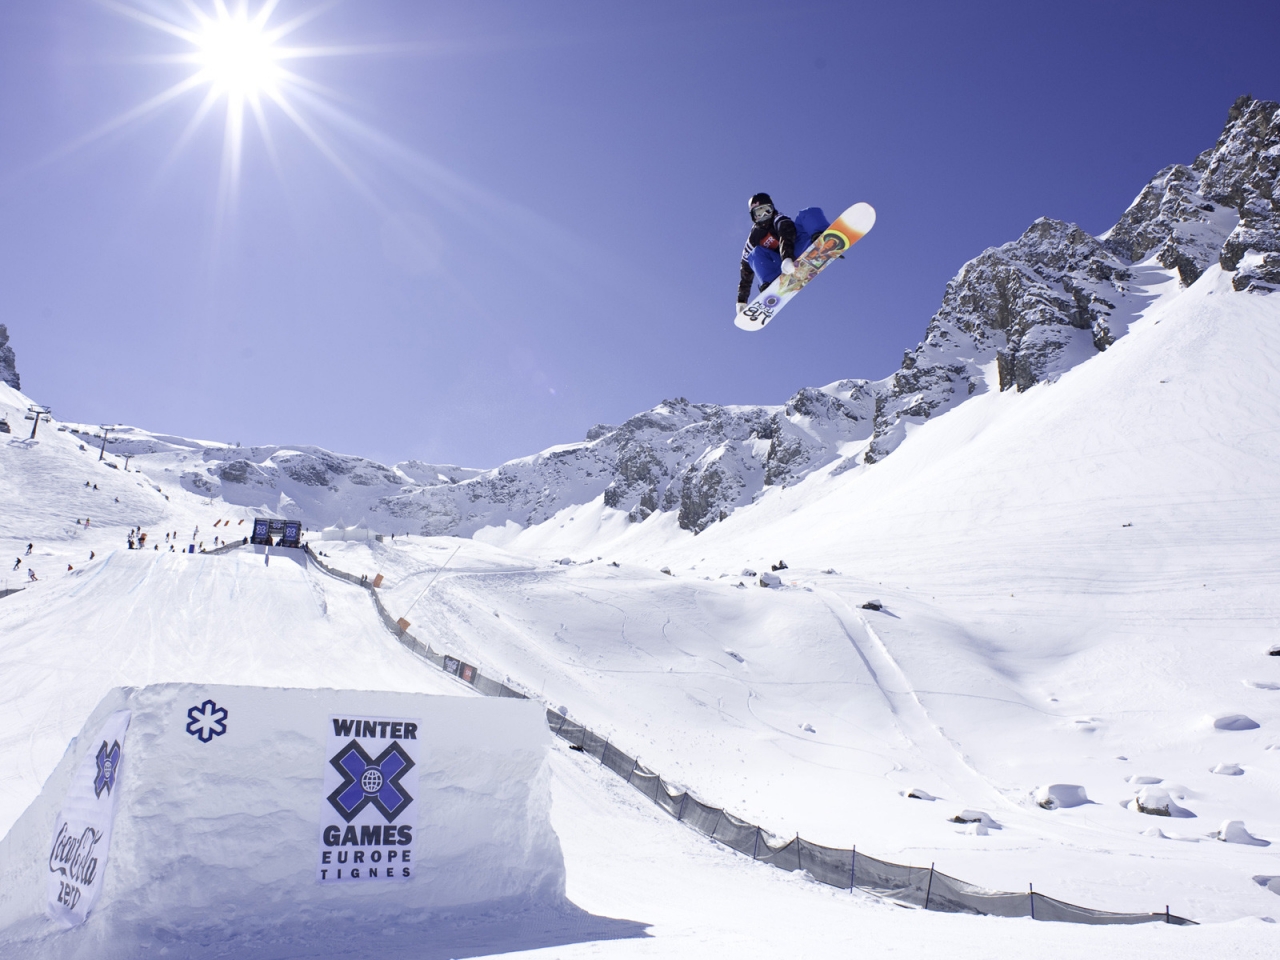 Snowboarding Season for 1280 x 960 resolution